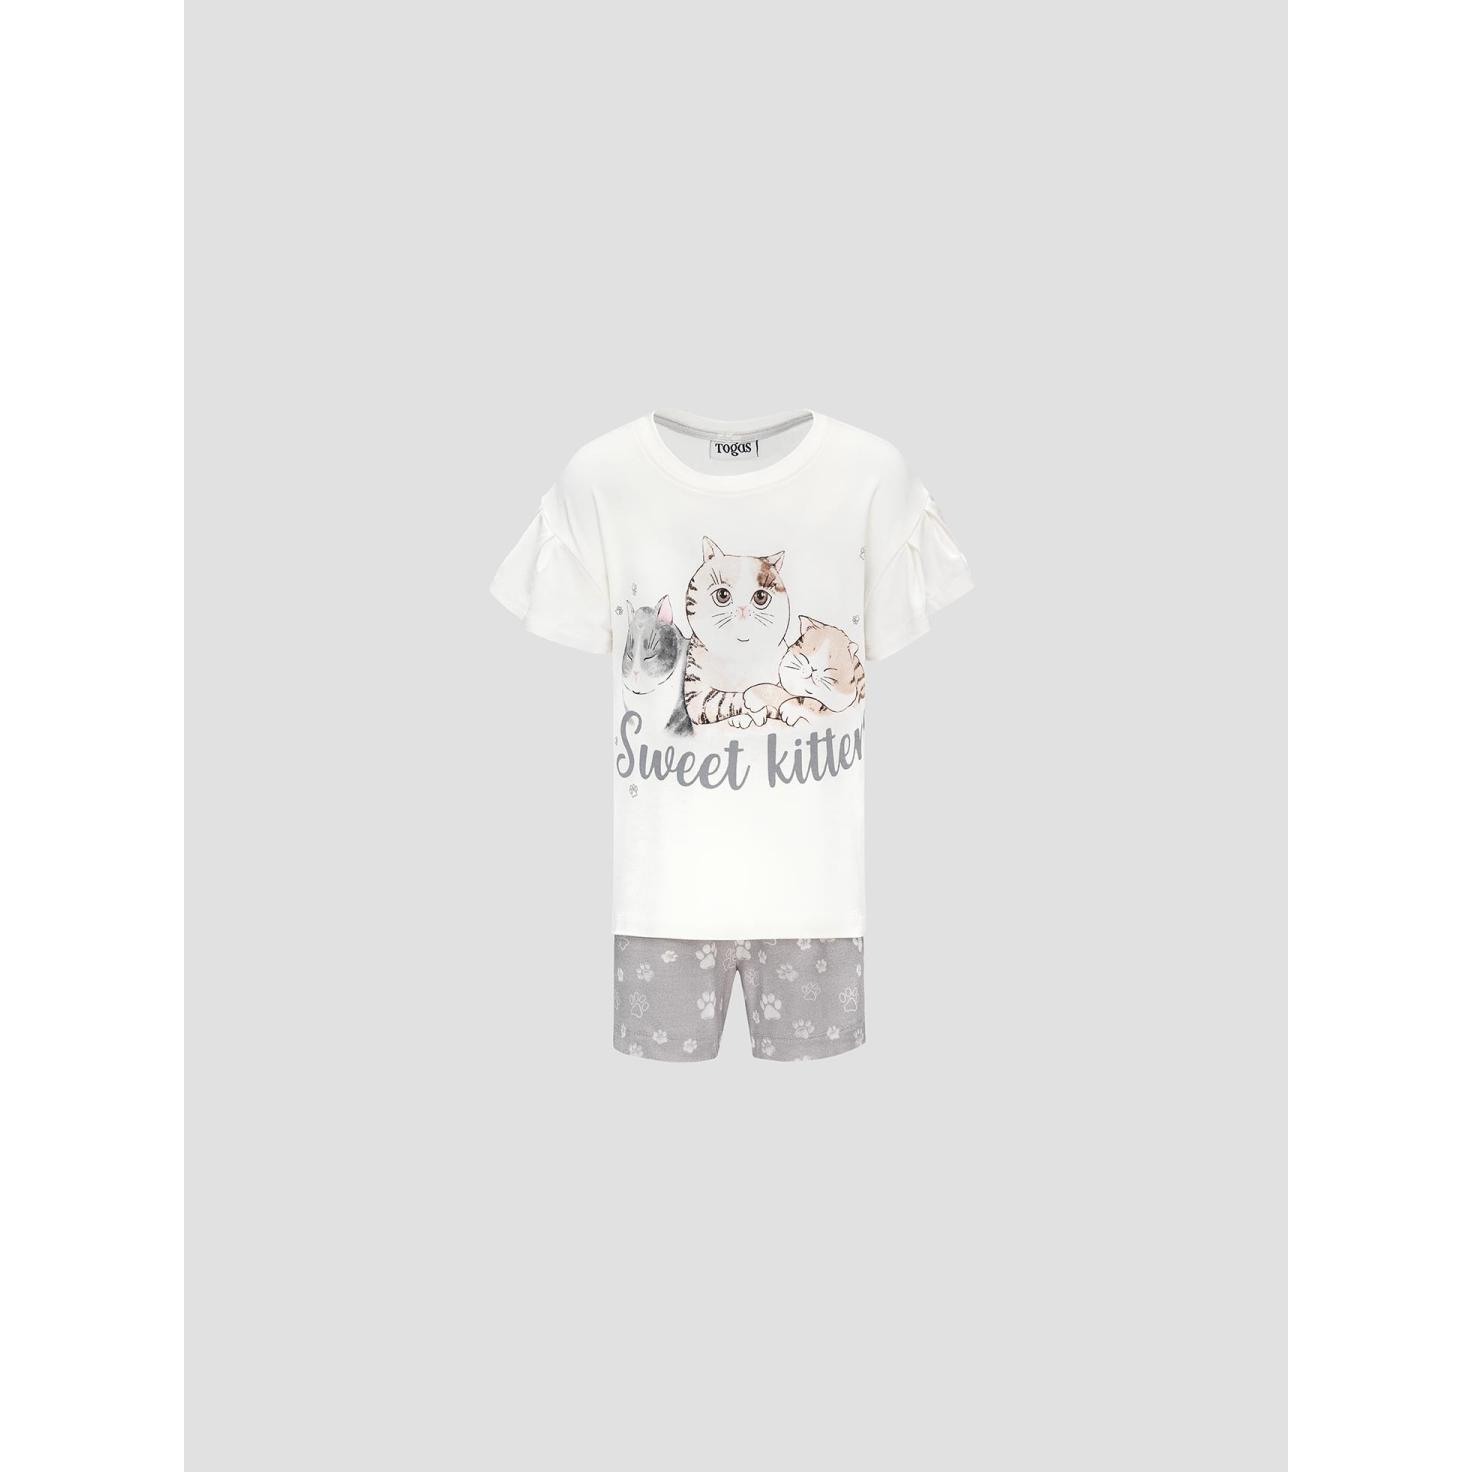 Пижама для девочек Kids by togas Китти бело-серая 116-122 см жен пижама с брюками арт 16 0693 баклажан р 50